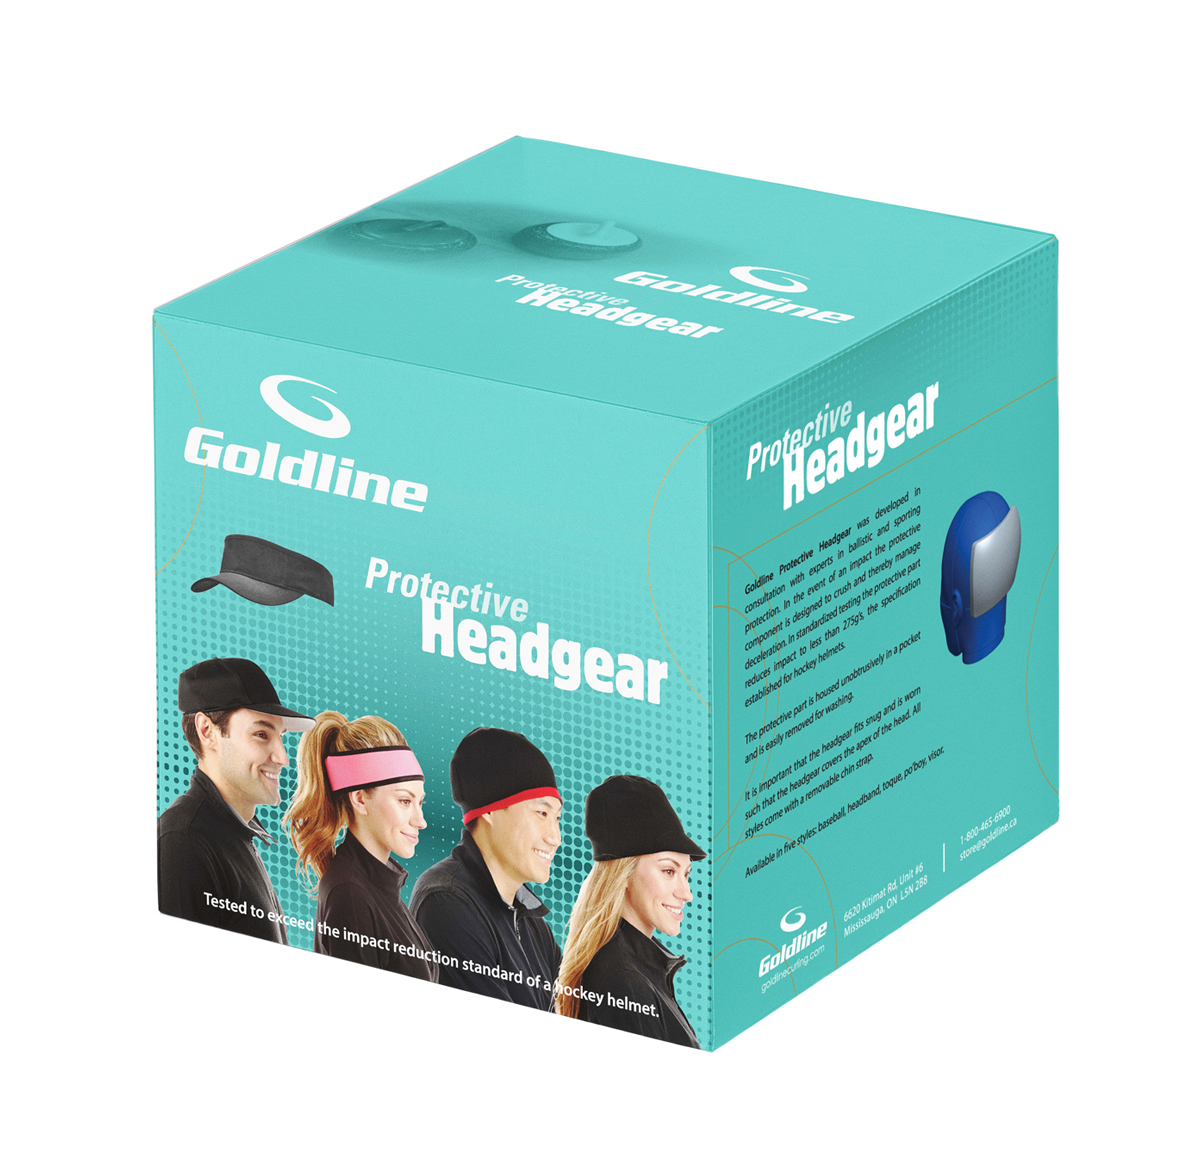 Goldline Protective Headgear Packaging